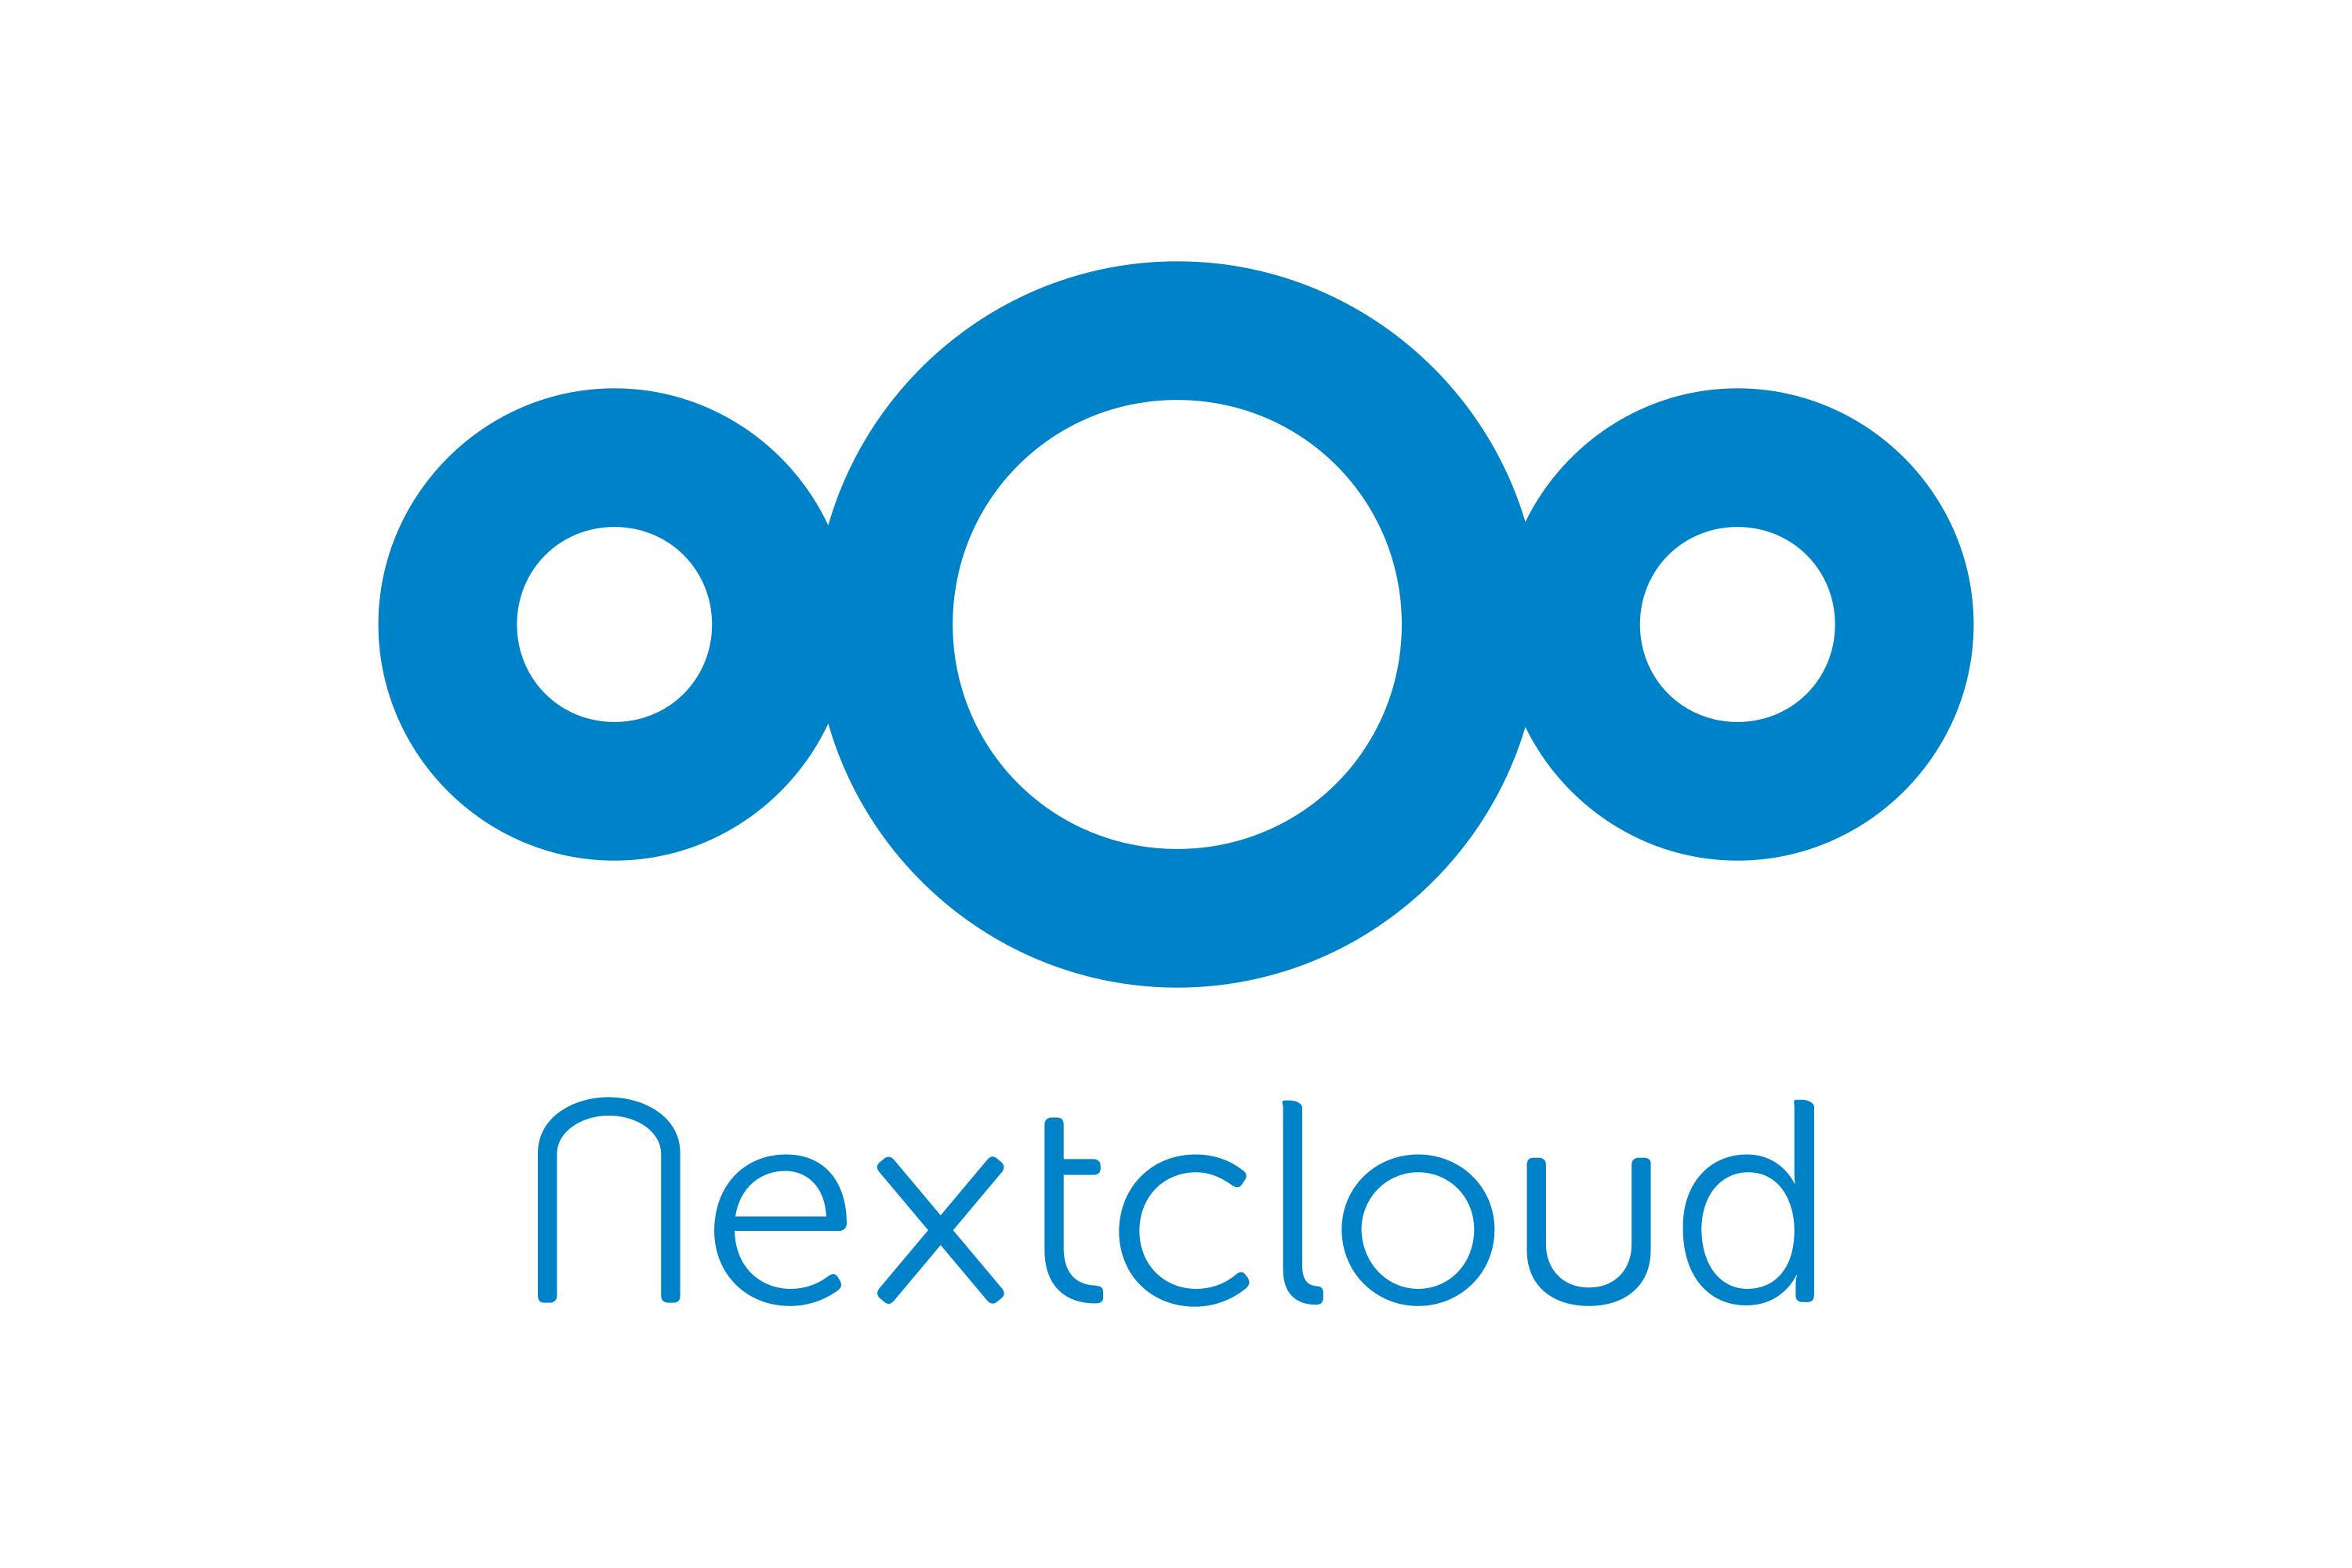 Download Nextcloud Logo in SVG Vector or PNG File Format - Logo.wine